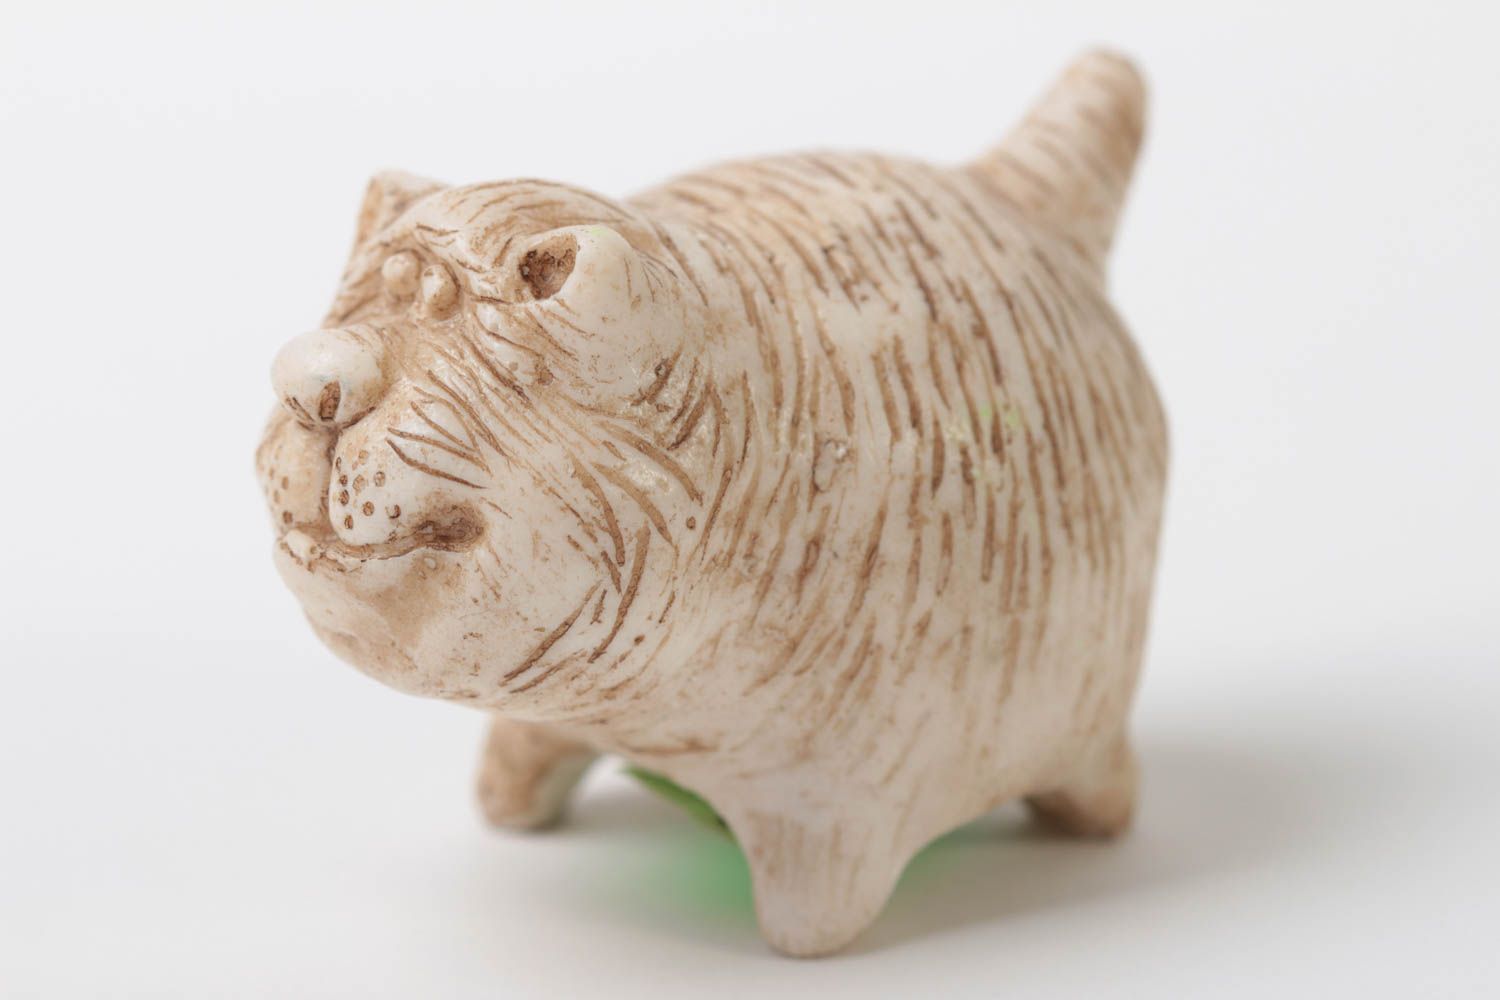 Handmade gift ideas animal figurines cat statue home decorations polymer resin photo 2